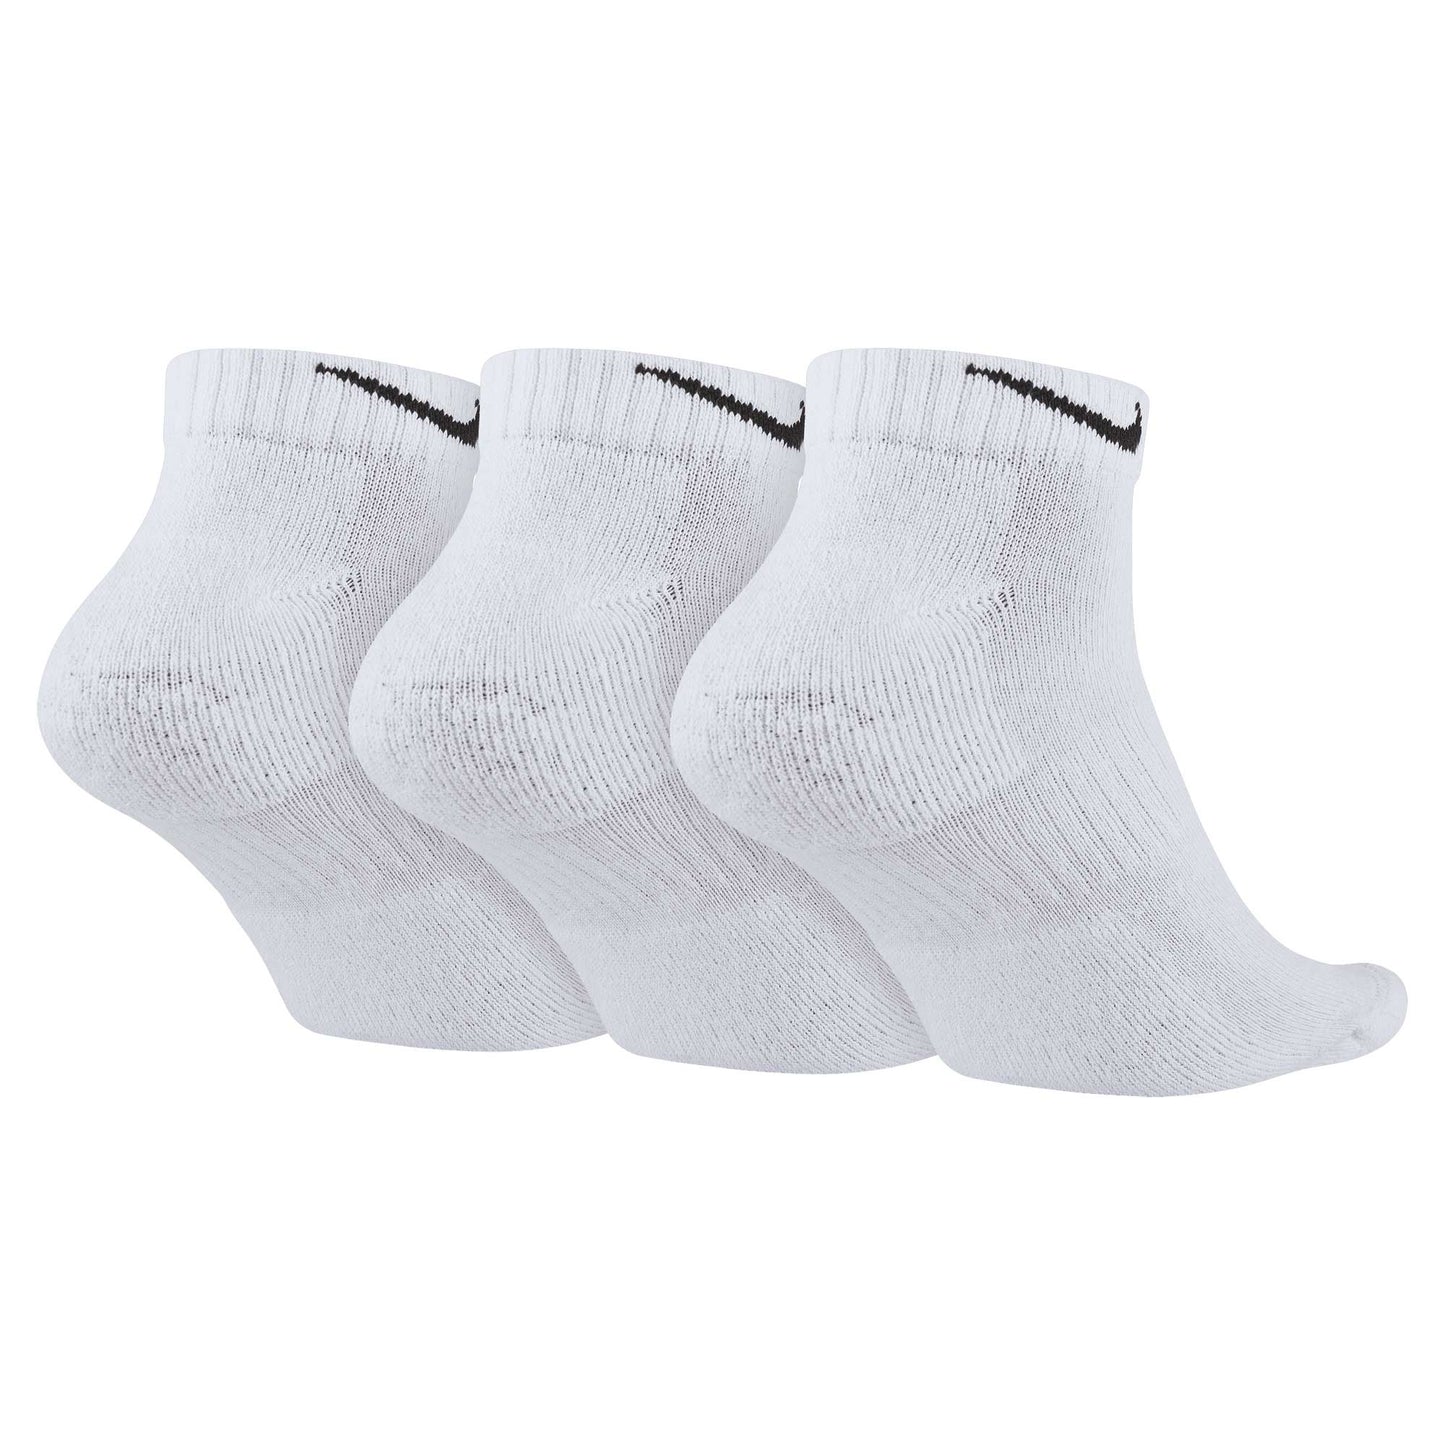 Nike SB Nike Everyday Cushioned Socks (3-Pack), white/black, white/black - Tiki Room Skateboards - 2